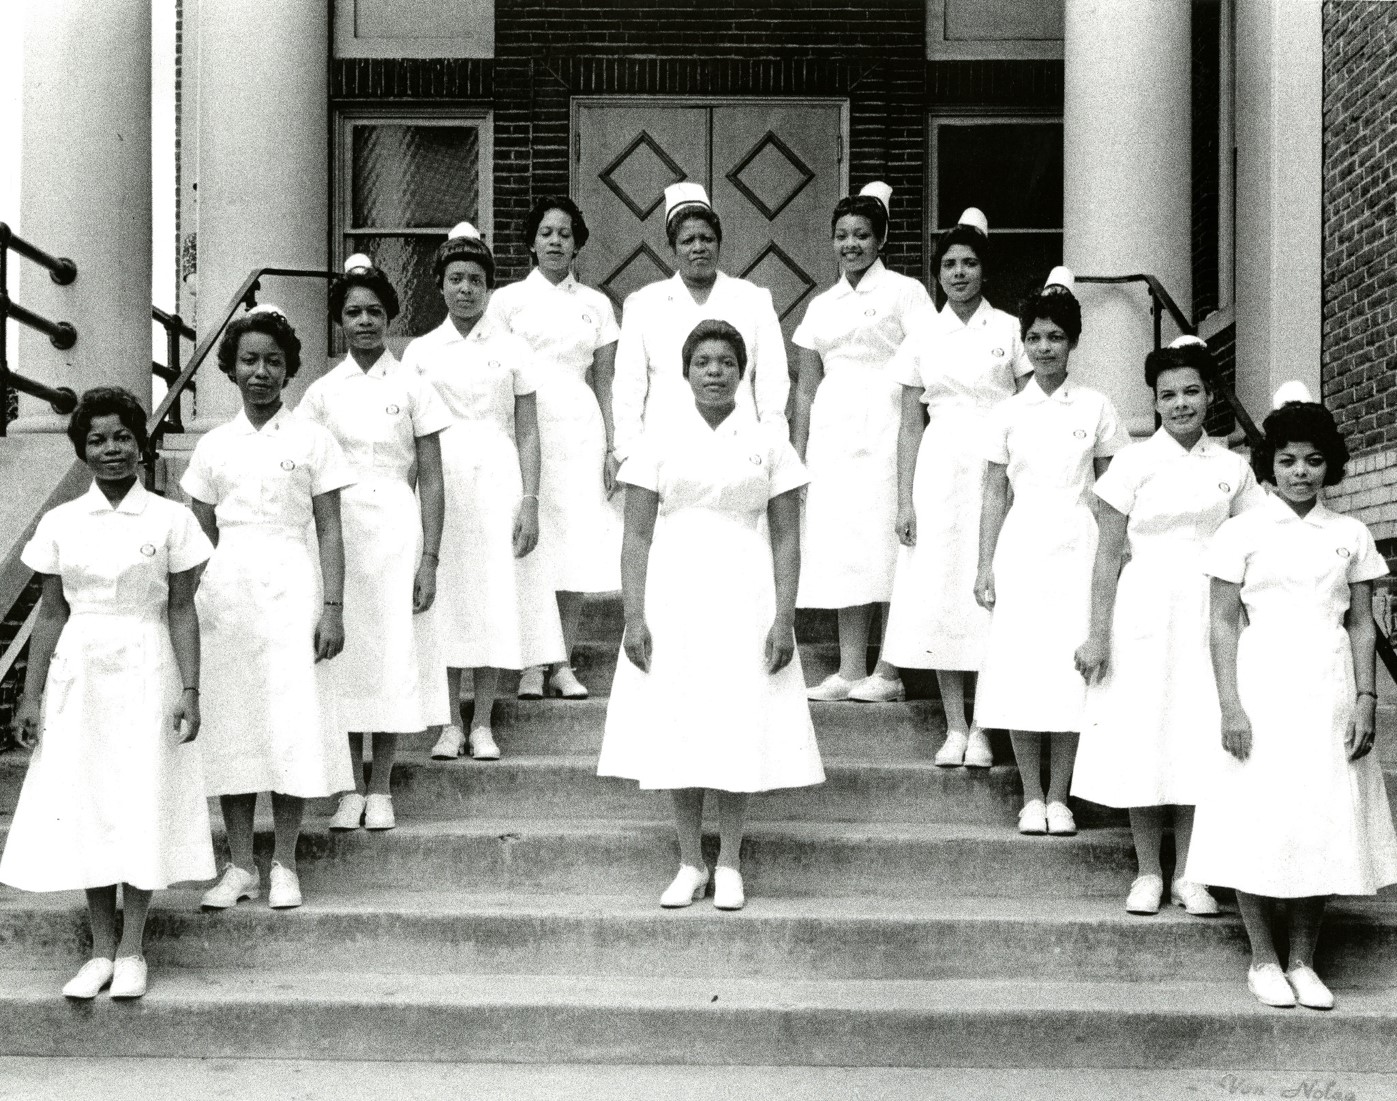 Black and white image of graduating students, circa 1960